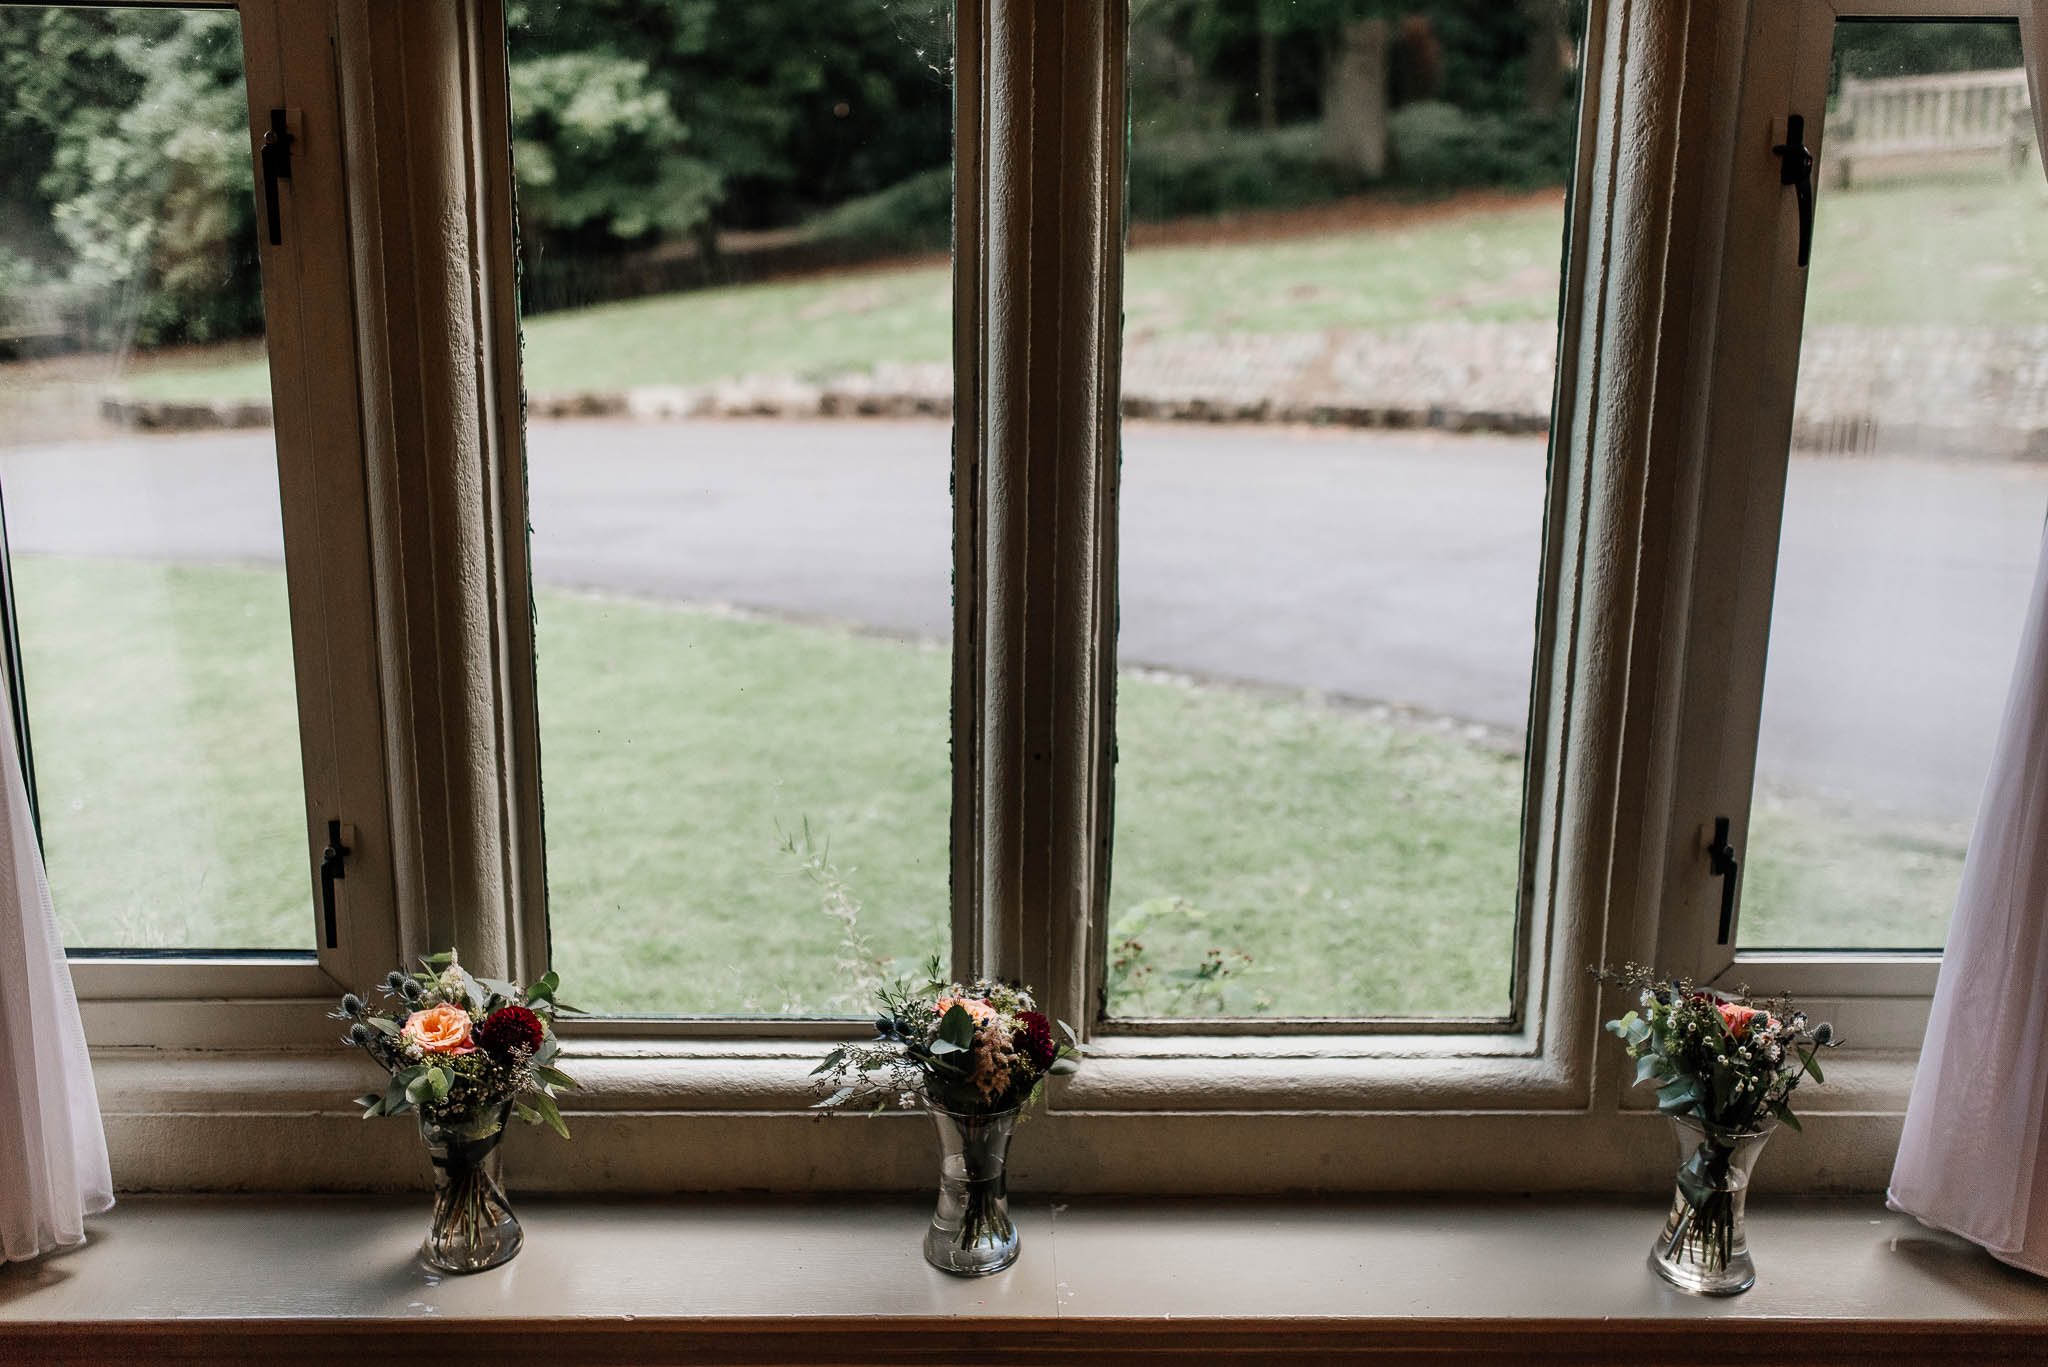 Window flowers at Whirlowbrook hall wedding venue